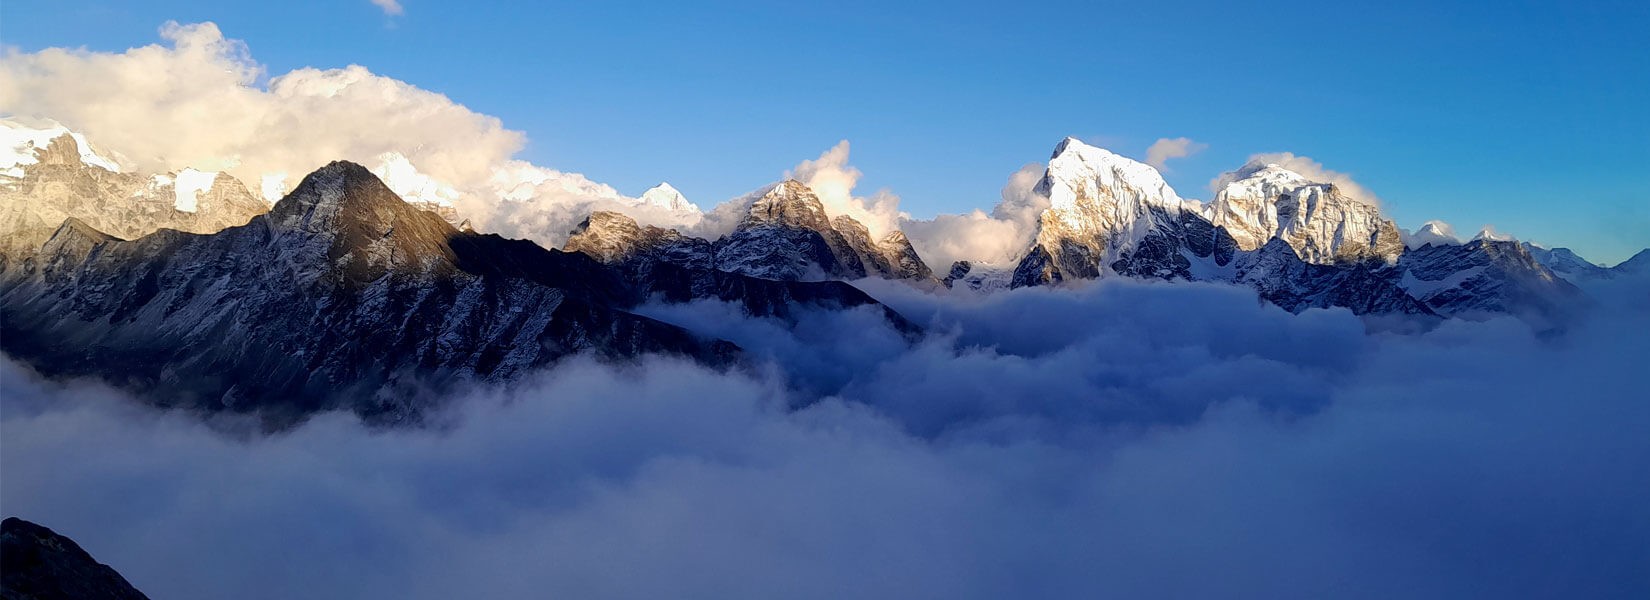 Everest Base Camp Trek in Autumn Season